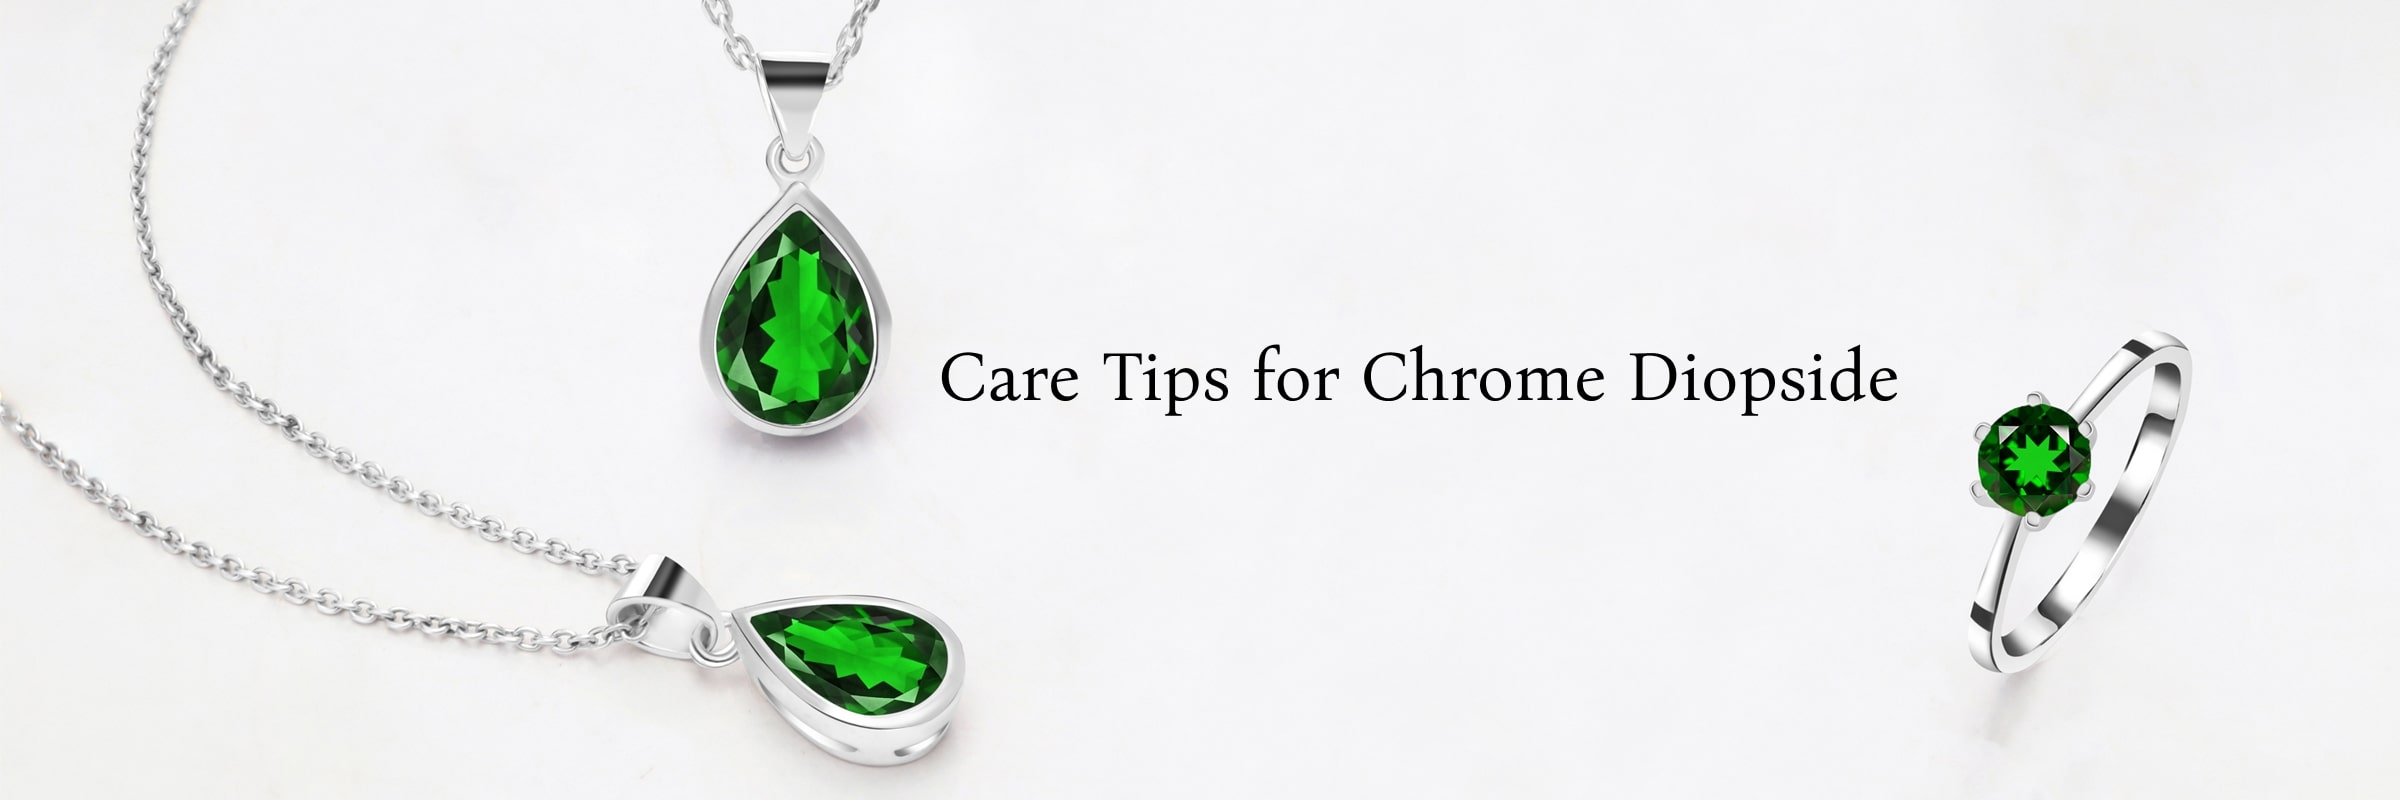 Proper Care of Chrome Diopside